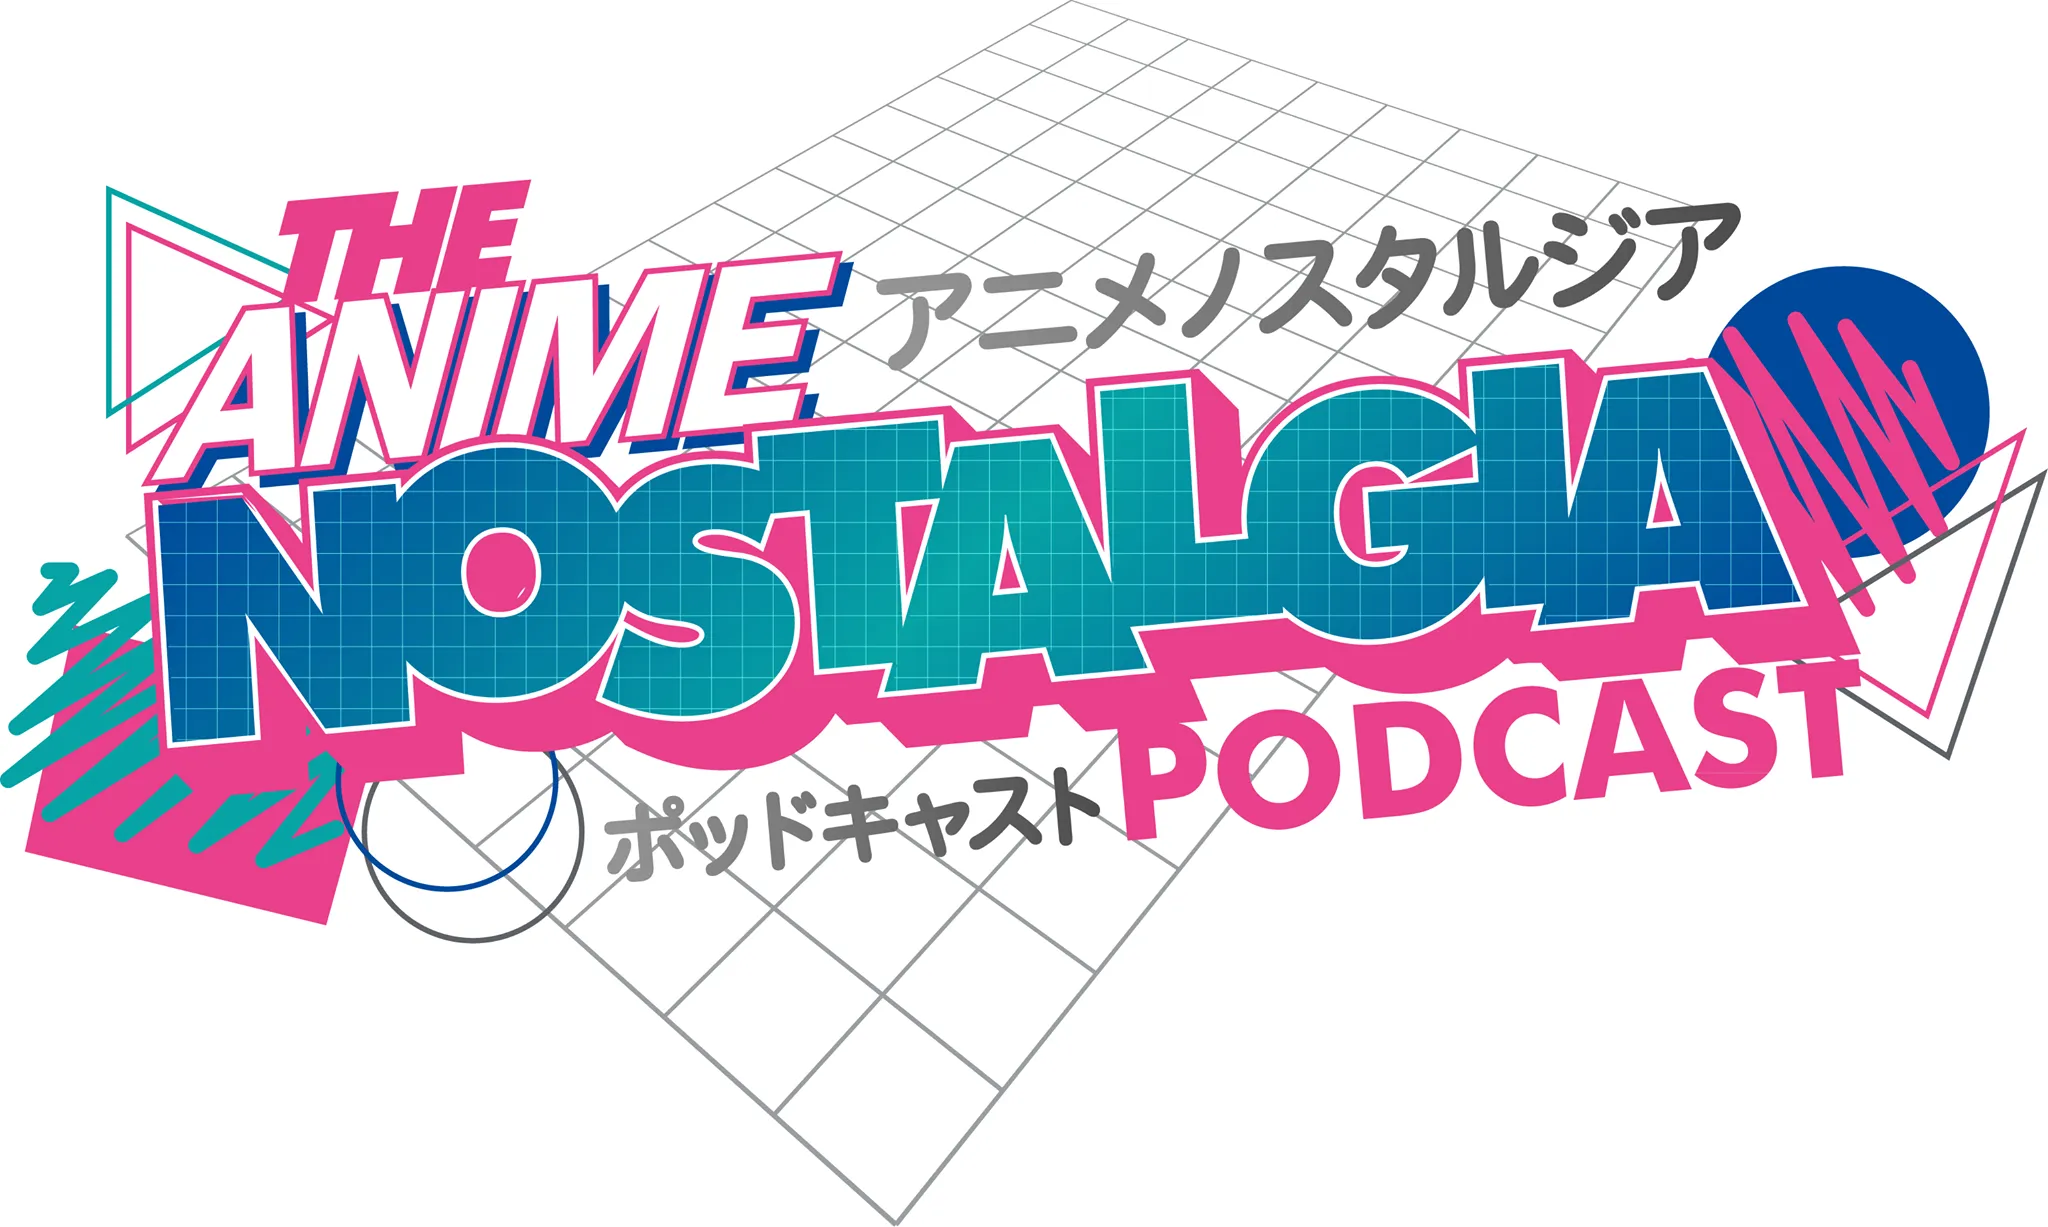 The Anime Nostalgia Podcast- Best Anime Podcasts Spotify!